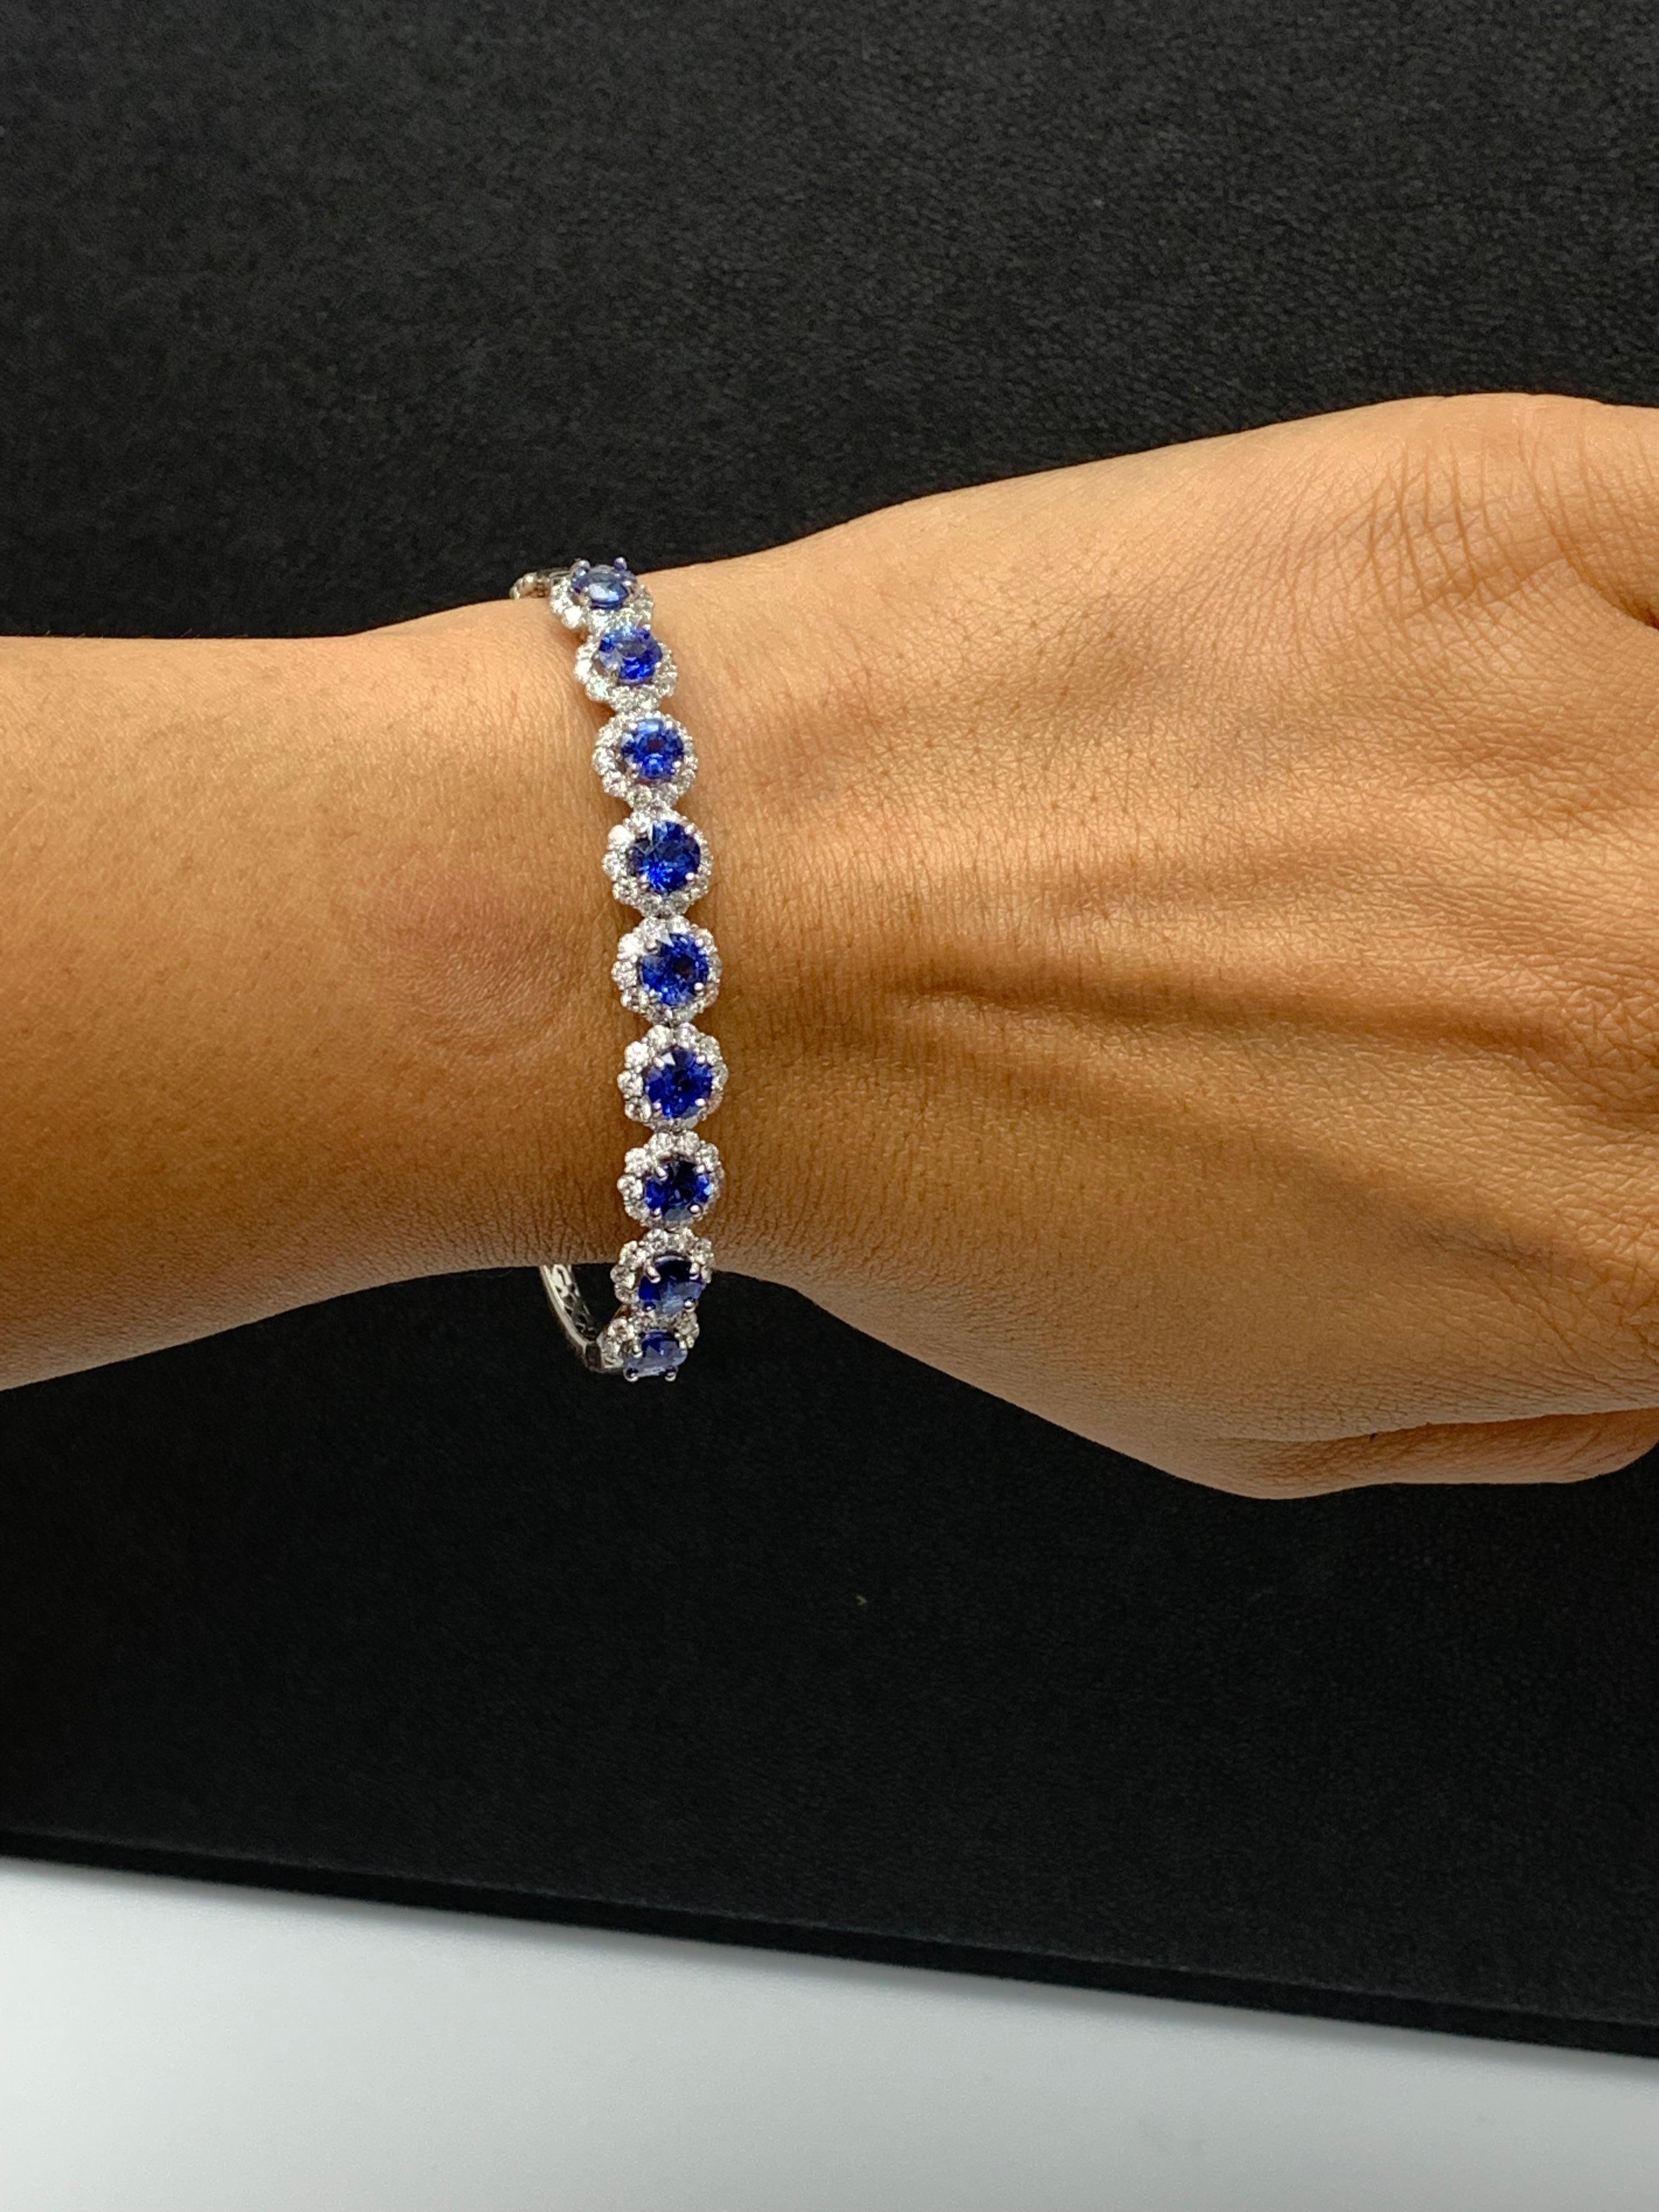 4.88 Carat Brilliant Cut Blue Sapphire Diamond Bangle Bracelet in 18k White Gold For Sale 2